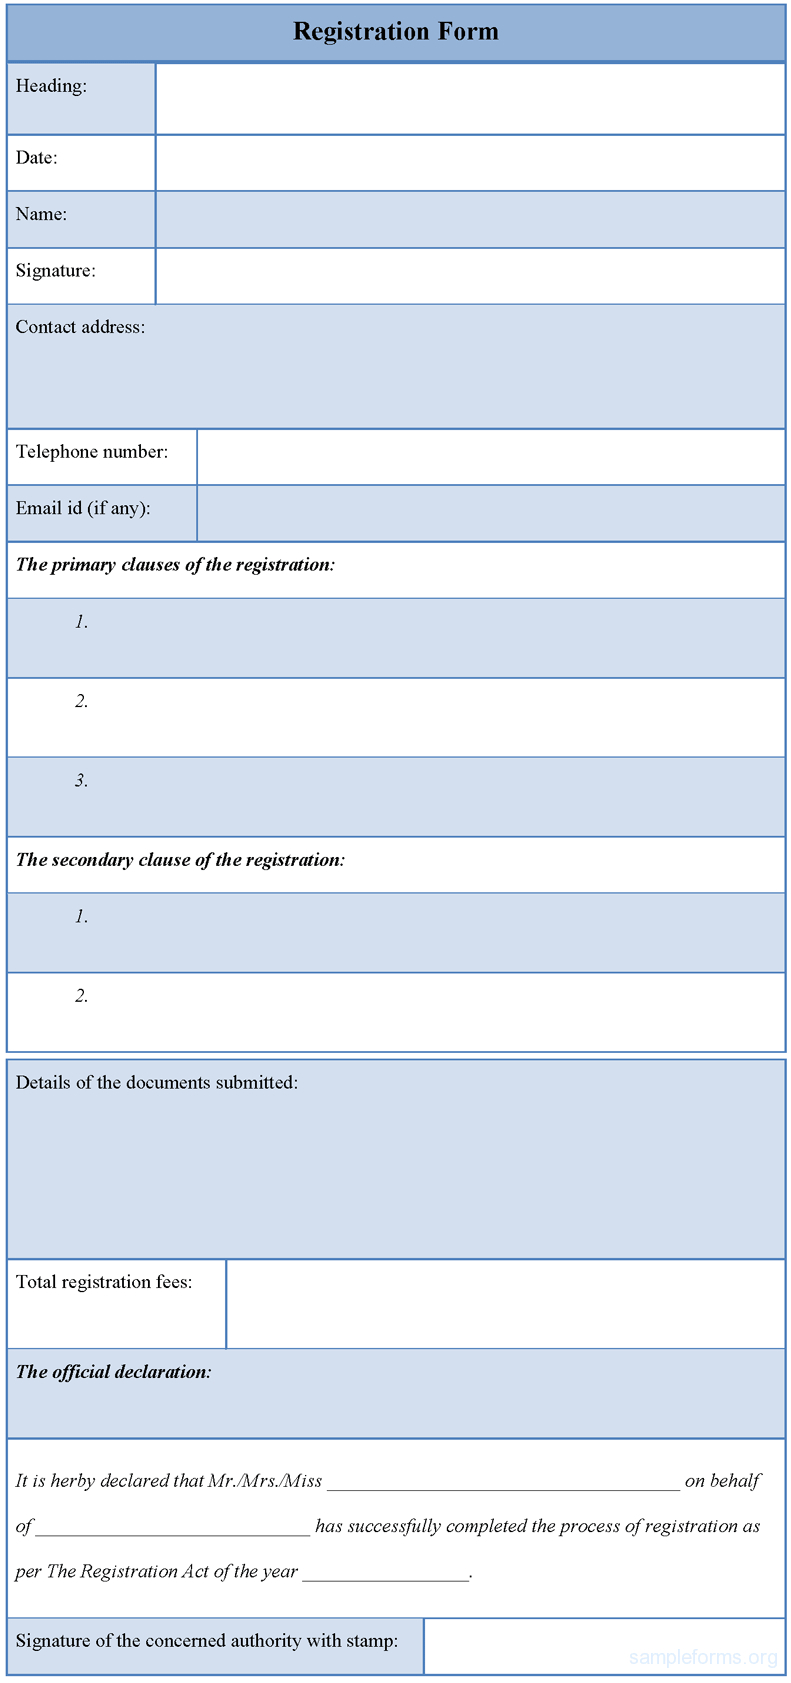 Registration Form Template | E Commercewordpress With Regard To Seminar Registration Form Template Word